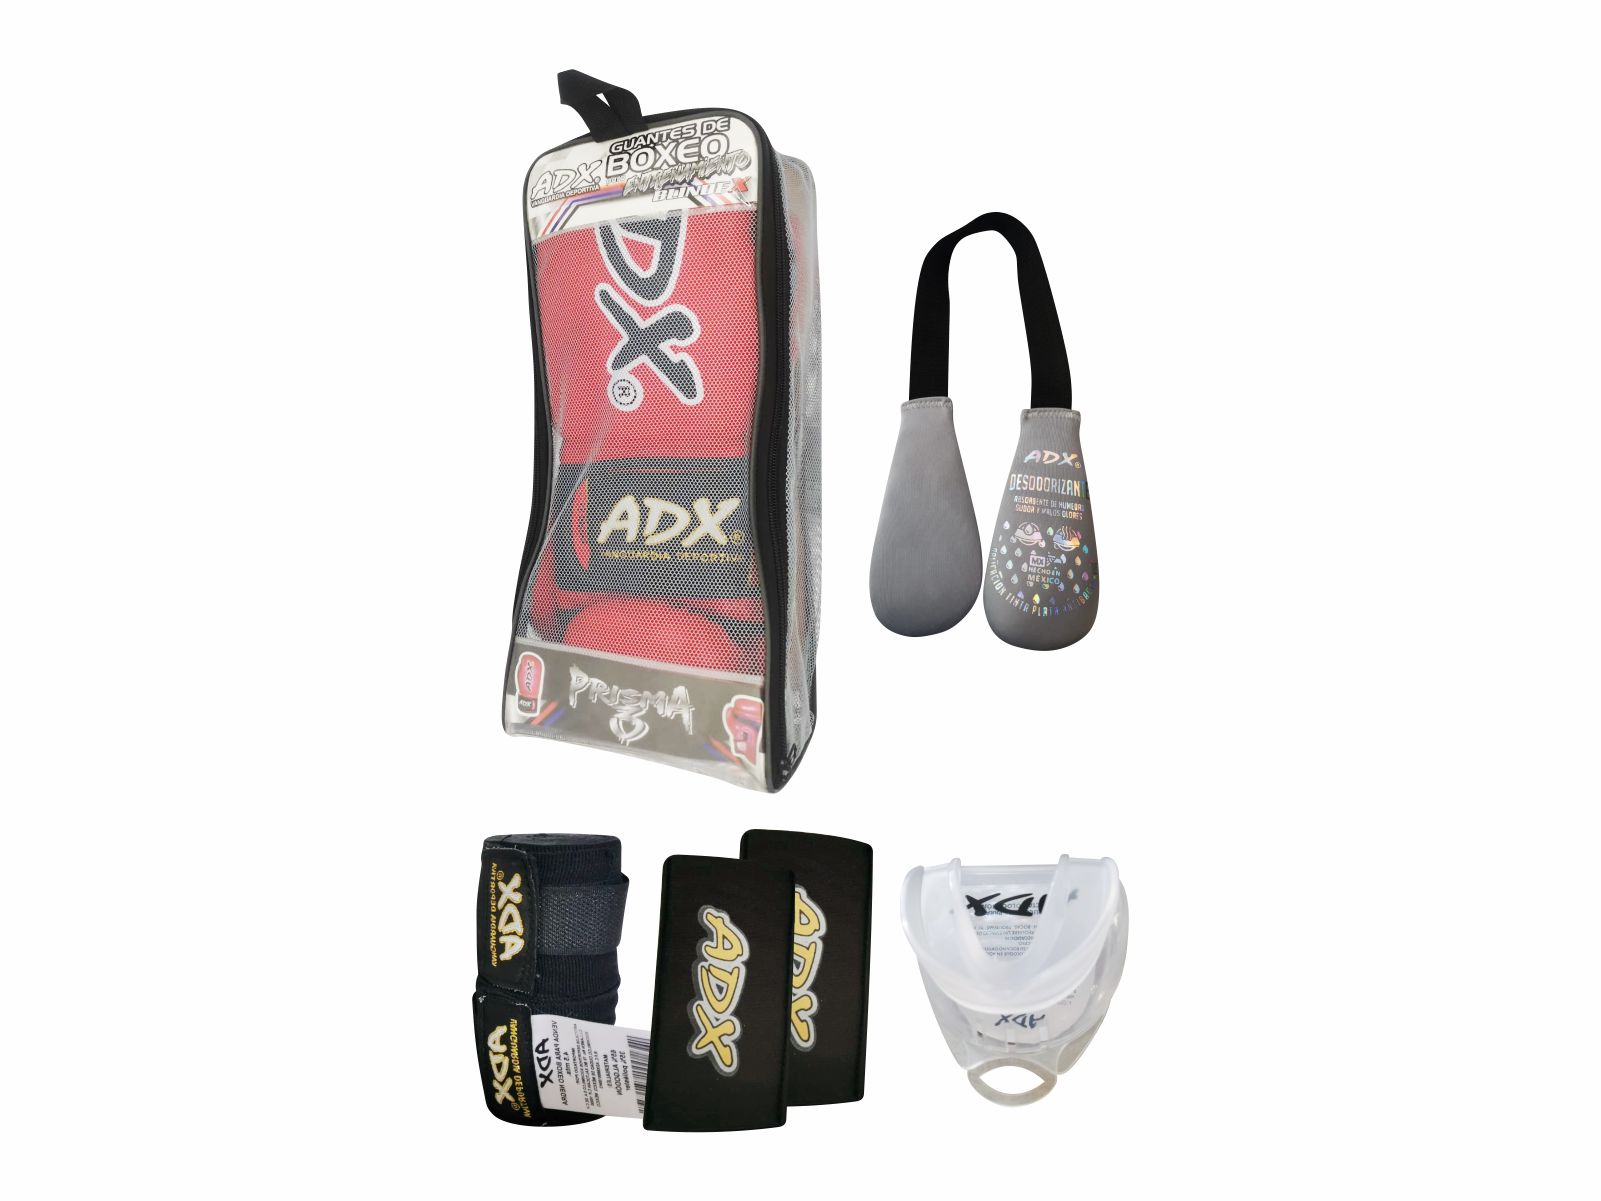 Kit Guantes Box Adx Modelo Prisma3 Peso Real + Complementos – ADX